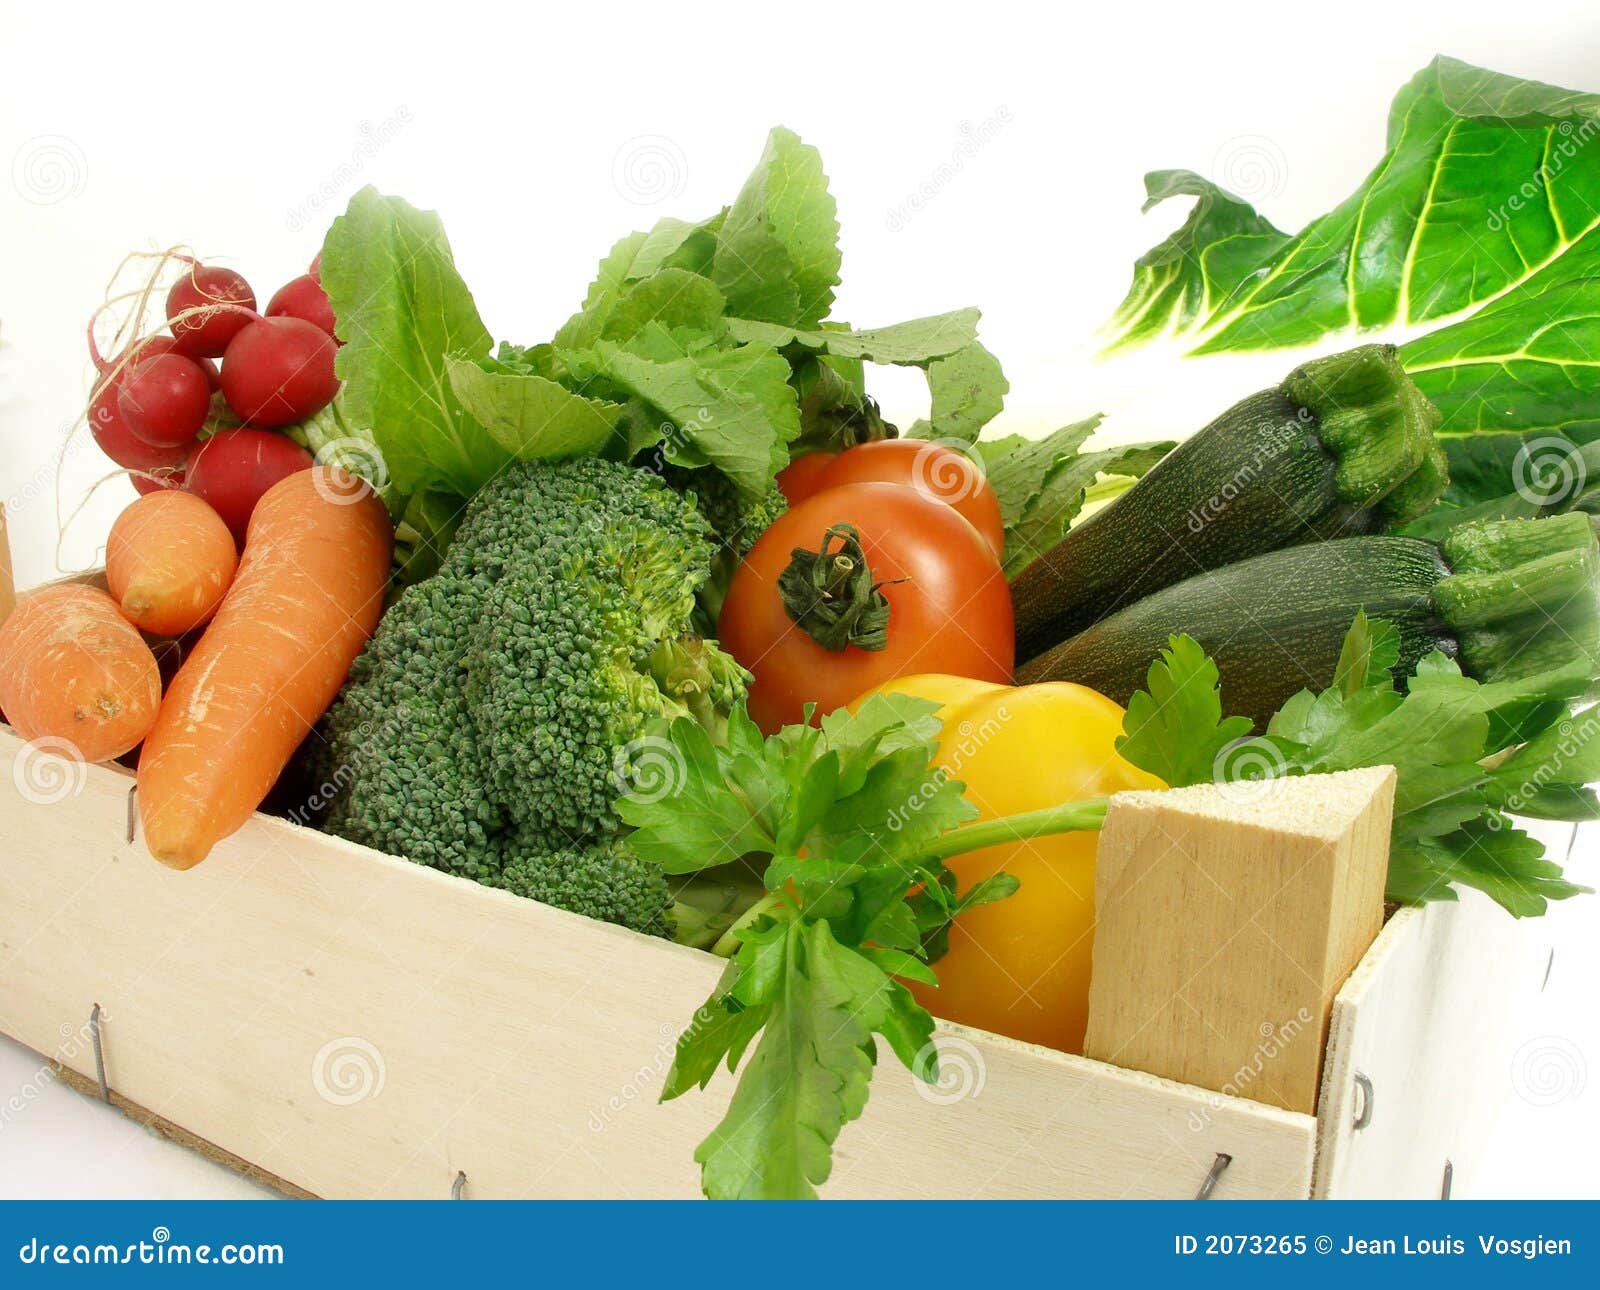 Box of vegetables stock image. Image of artichokes, radish - 2073265